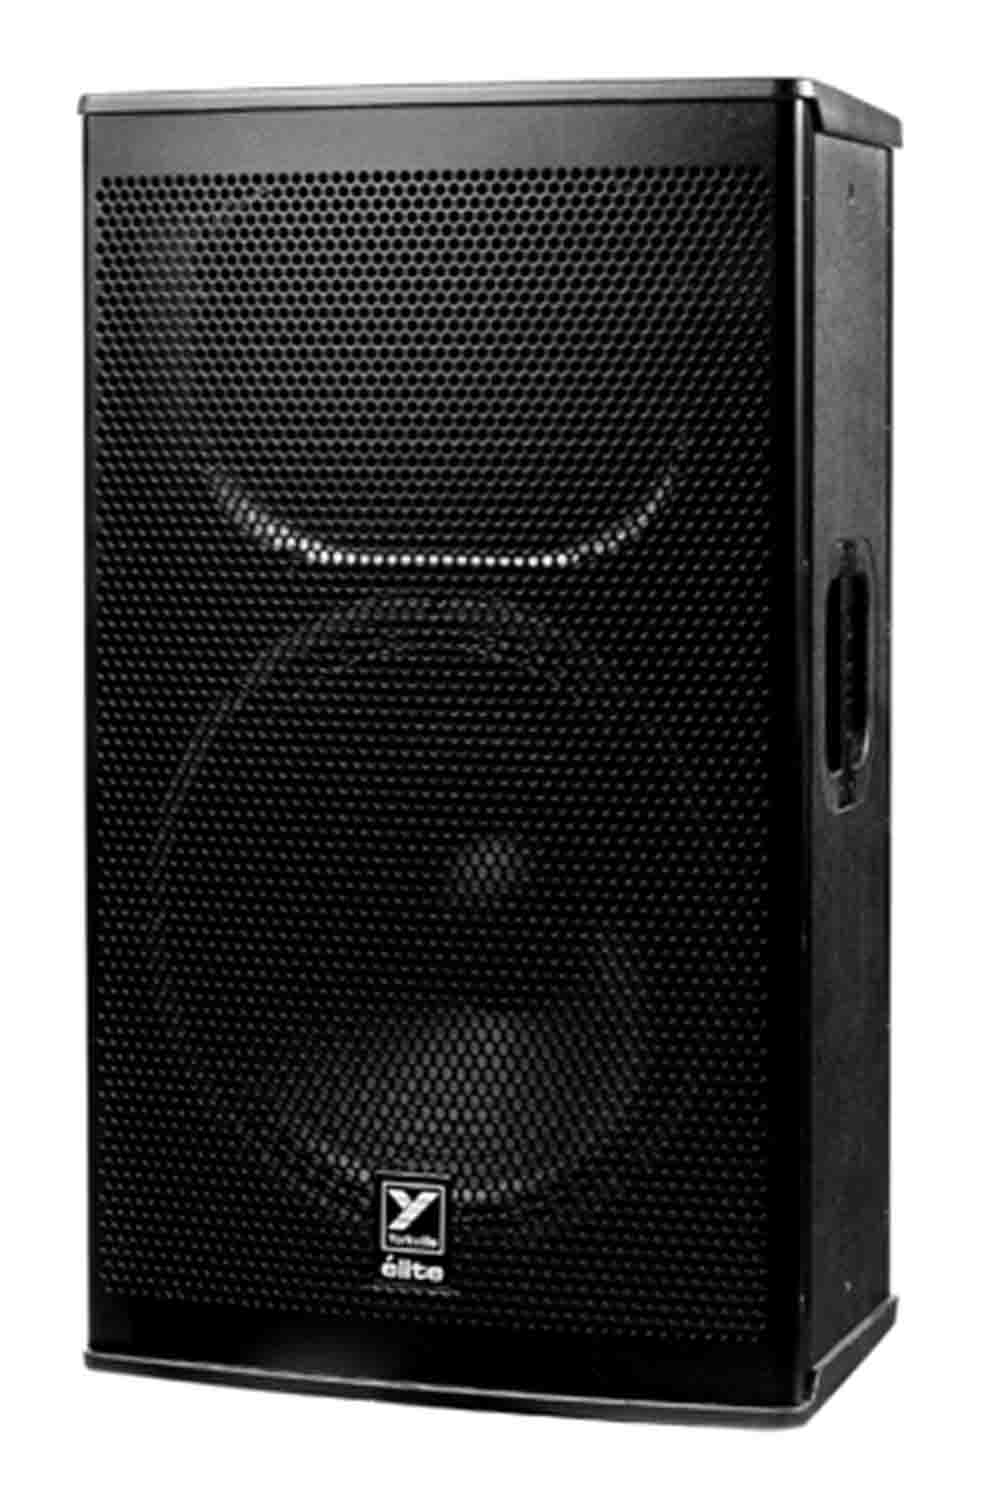 Yorkvile EF15P Elite Series 15" 2-Way Powered Speaker - 1200 Watts - Hollywood DJ